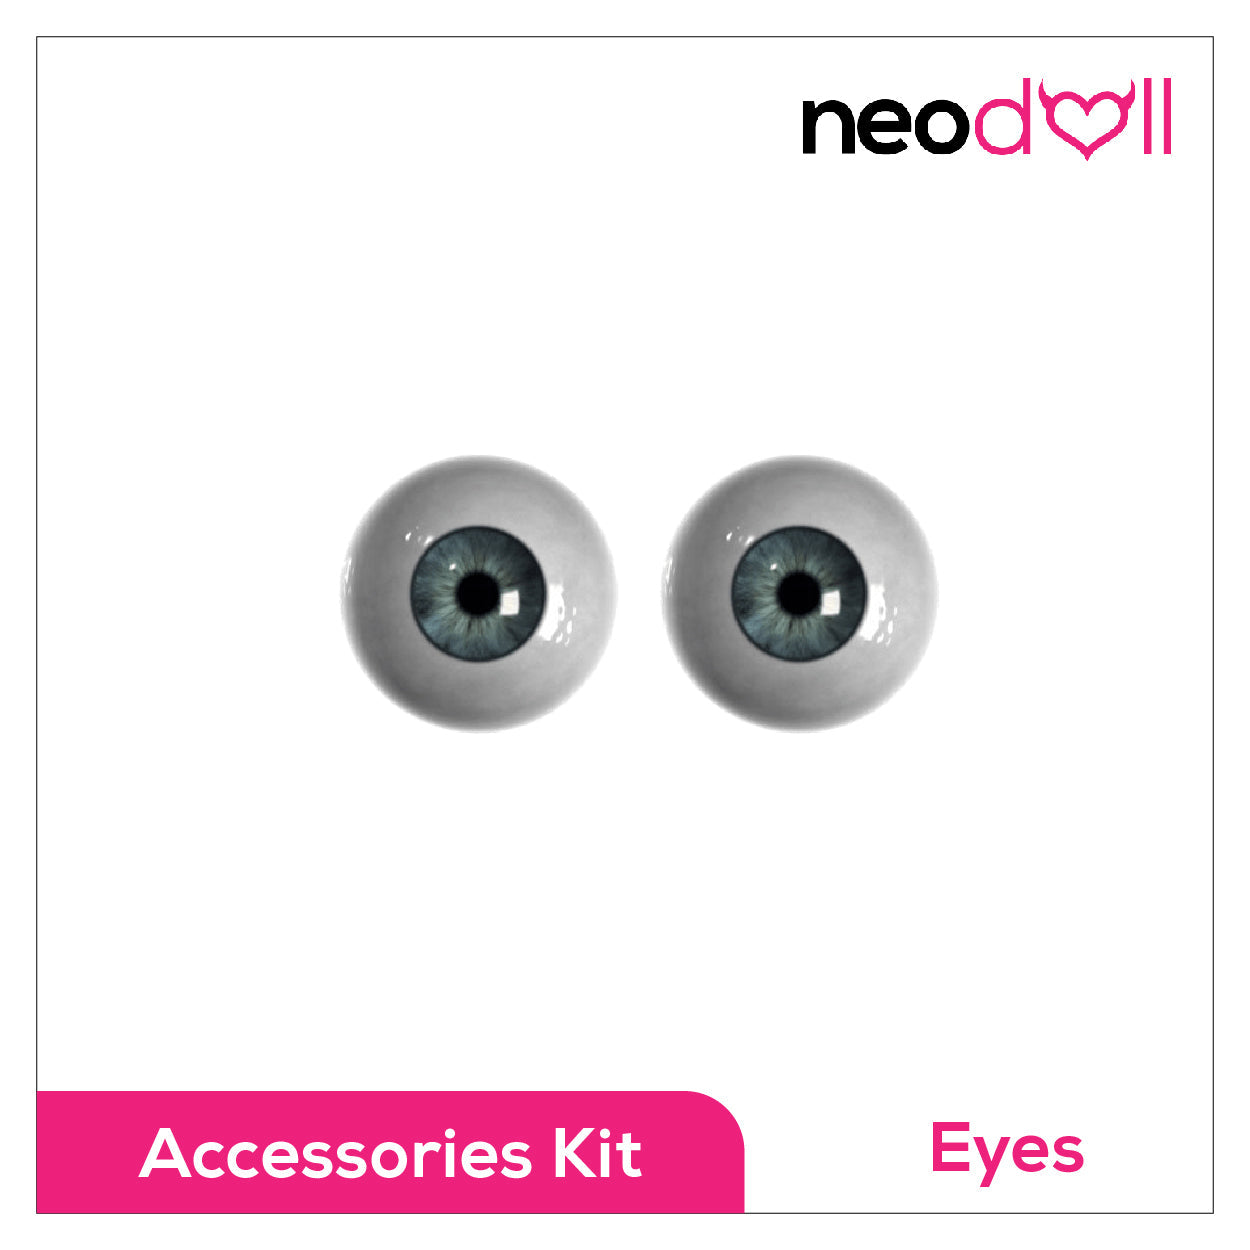 Neodoll Accessories Kit